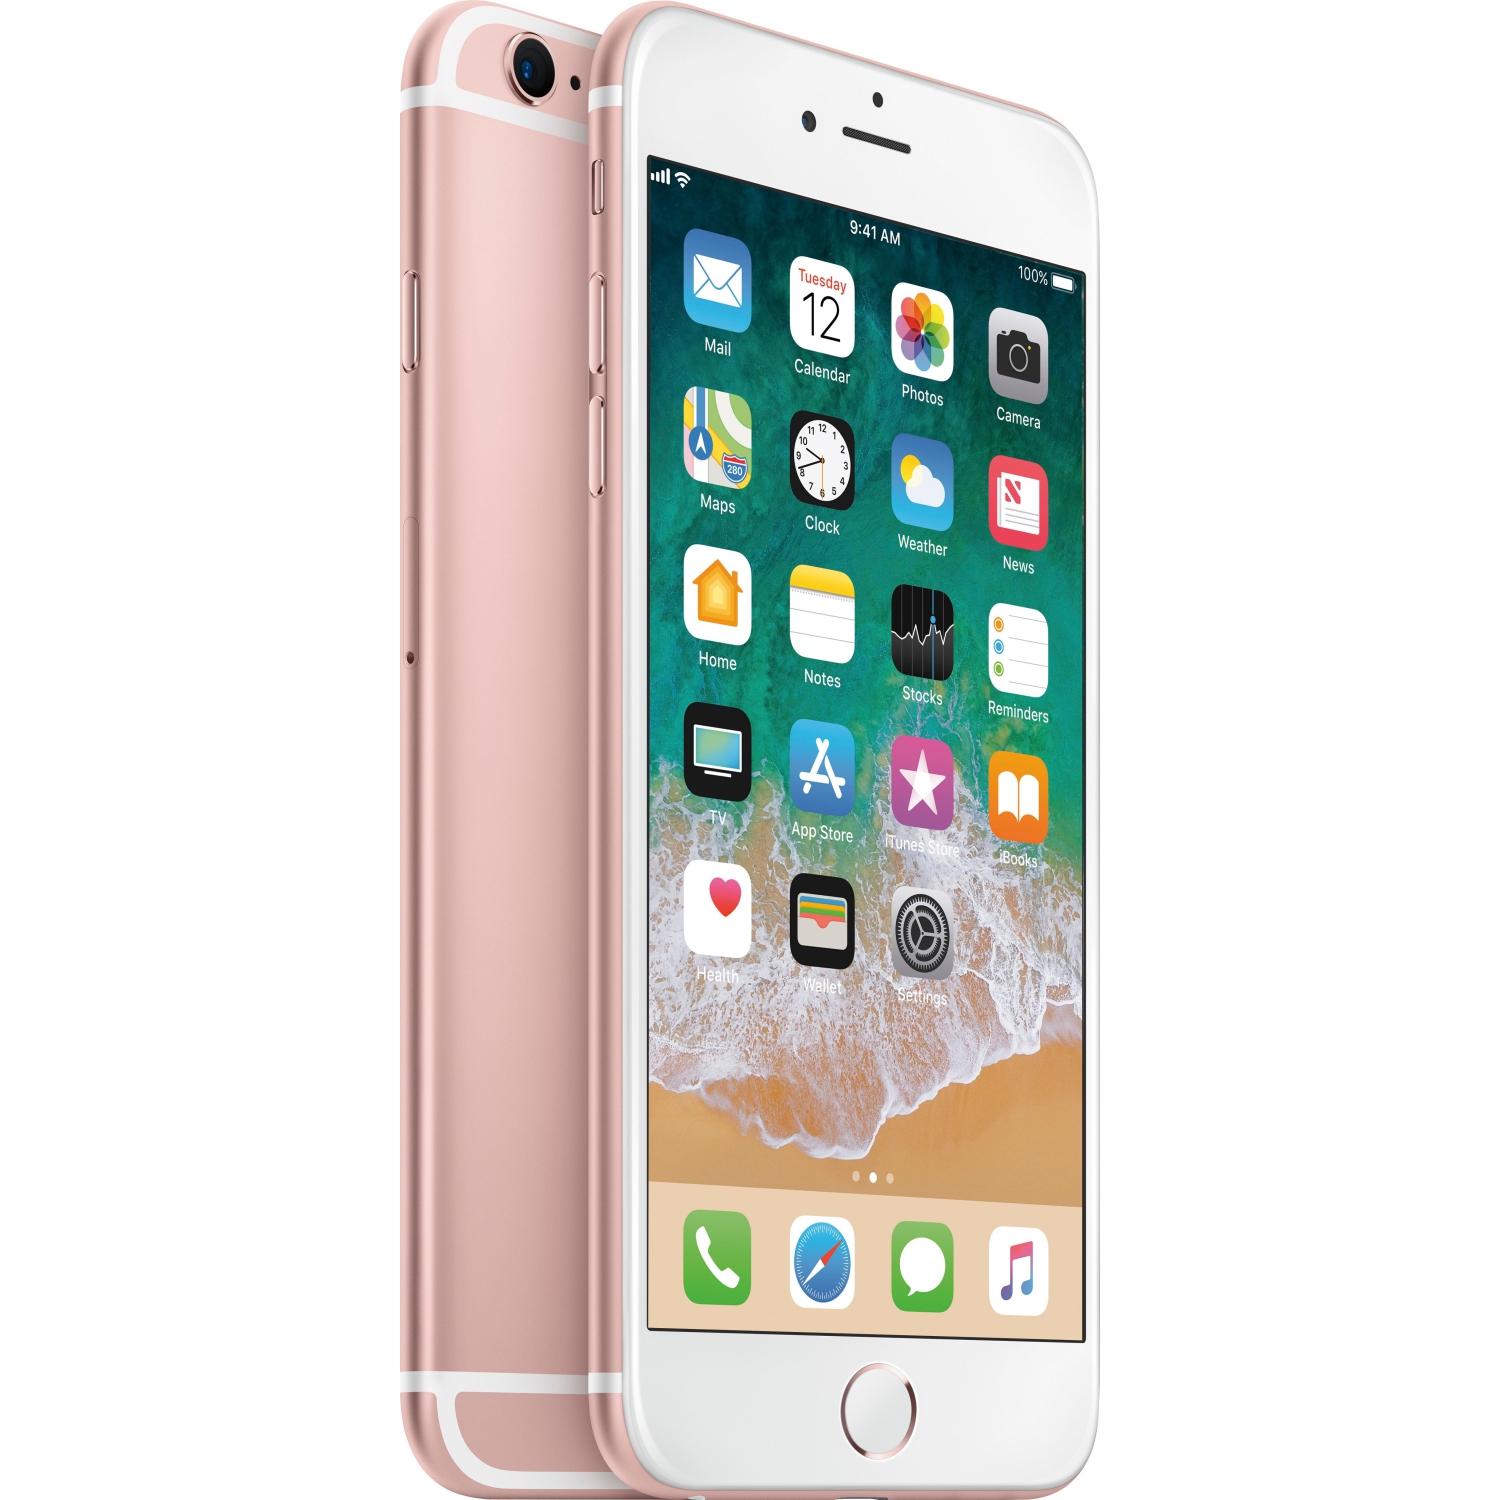 Apple iPhone 6s Plus 128GB Smartphone - Rose Gold - Unlocked - Open Box